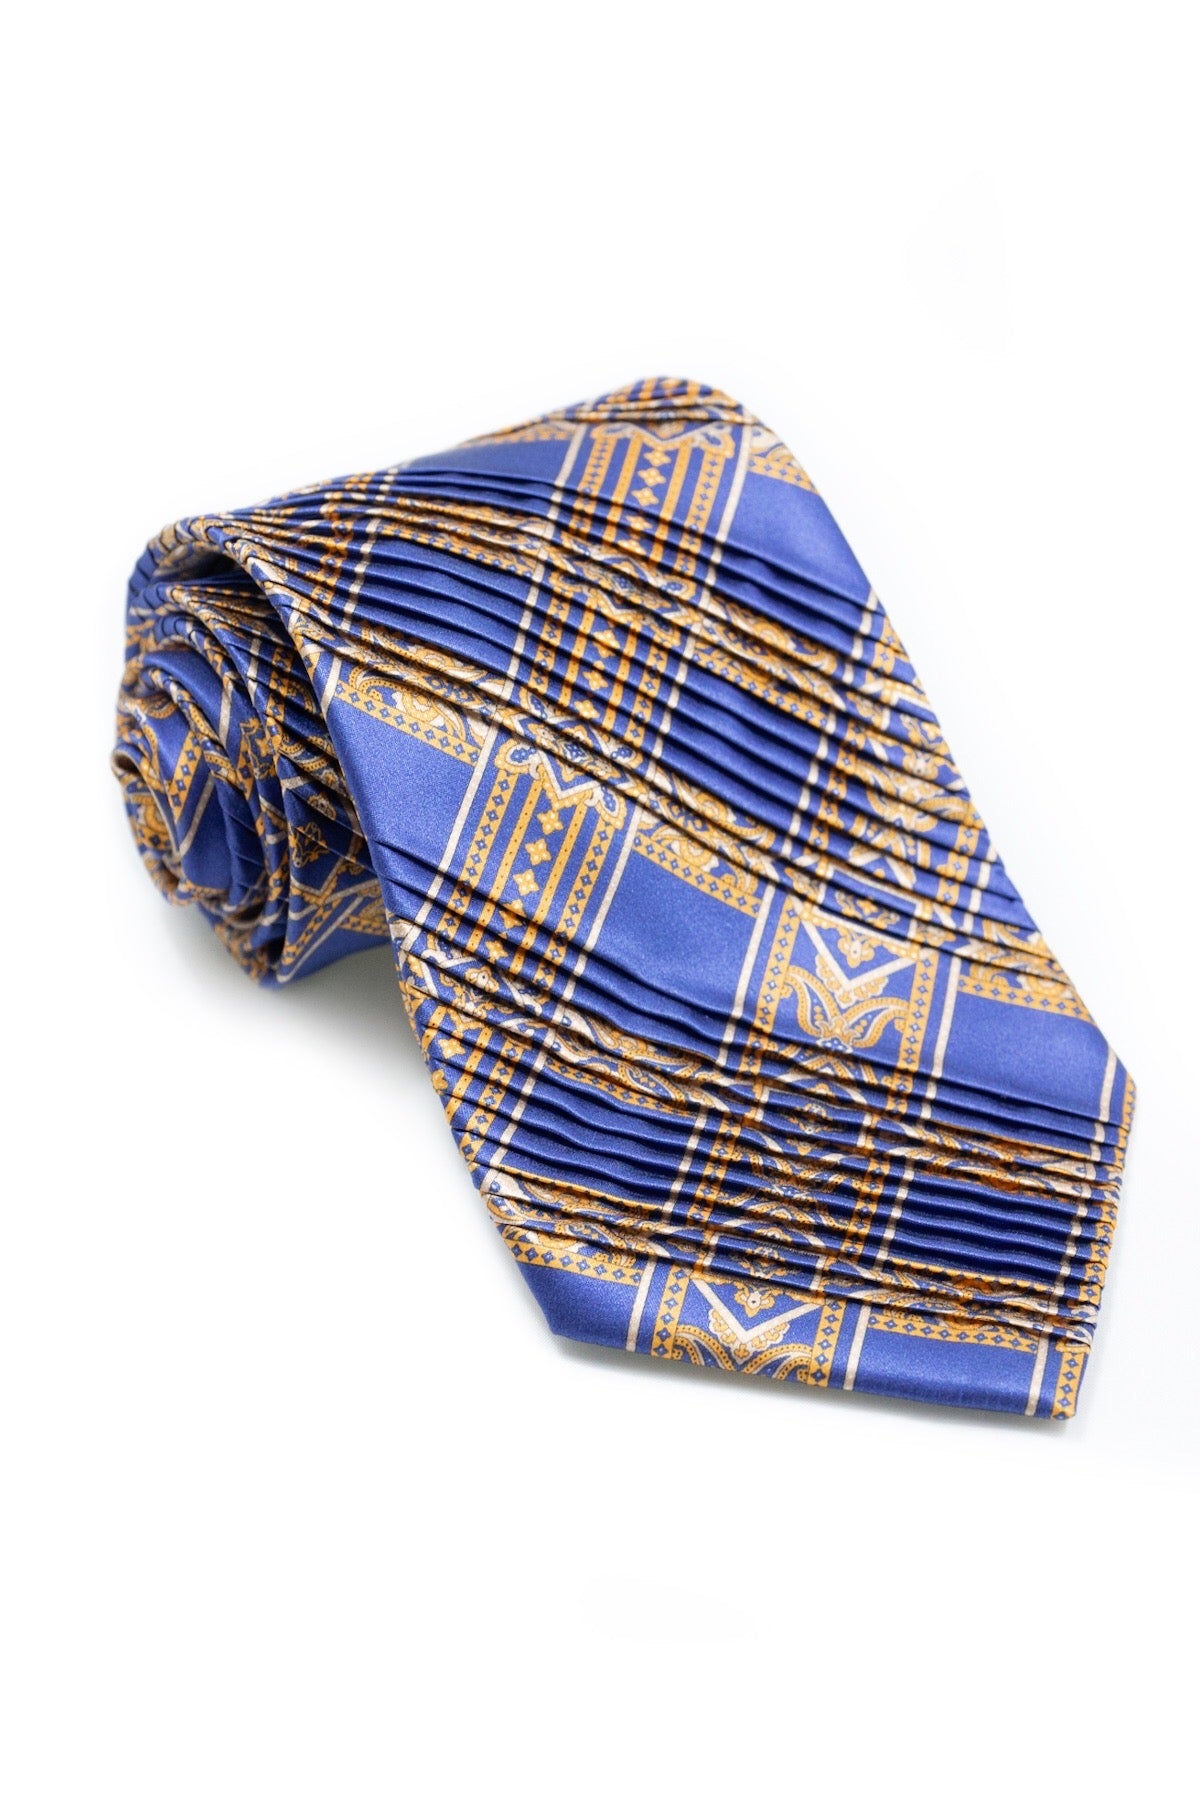 STEFANO RICCI Pleats Tie  blue × yellow